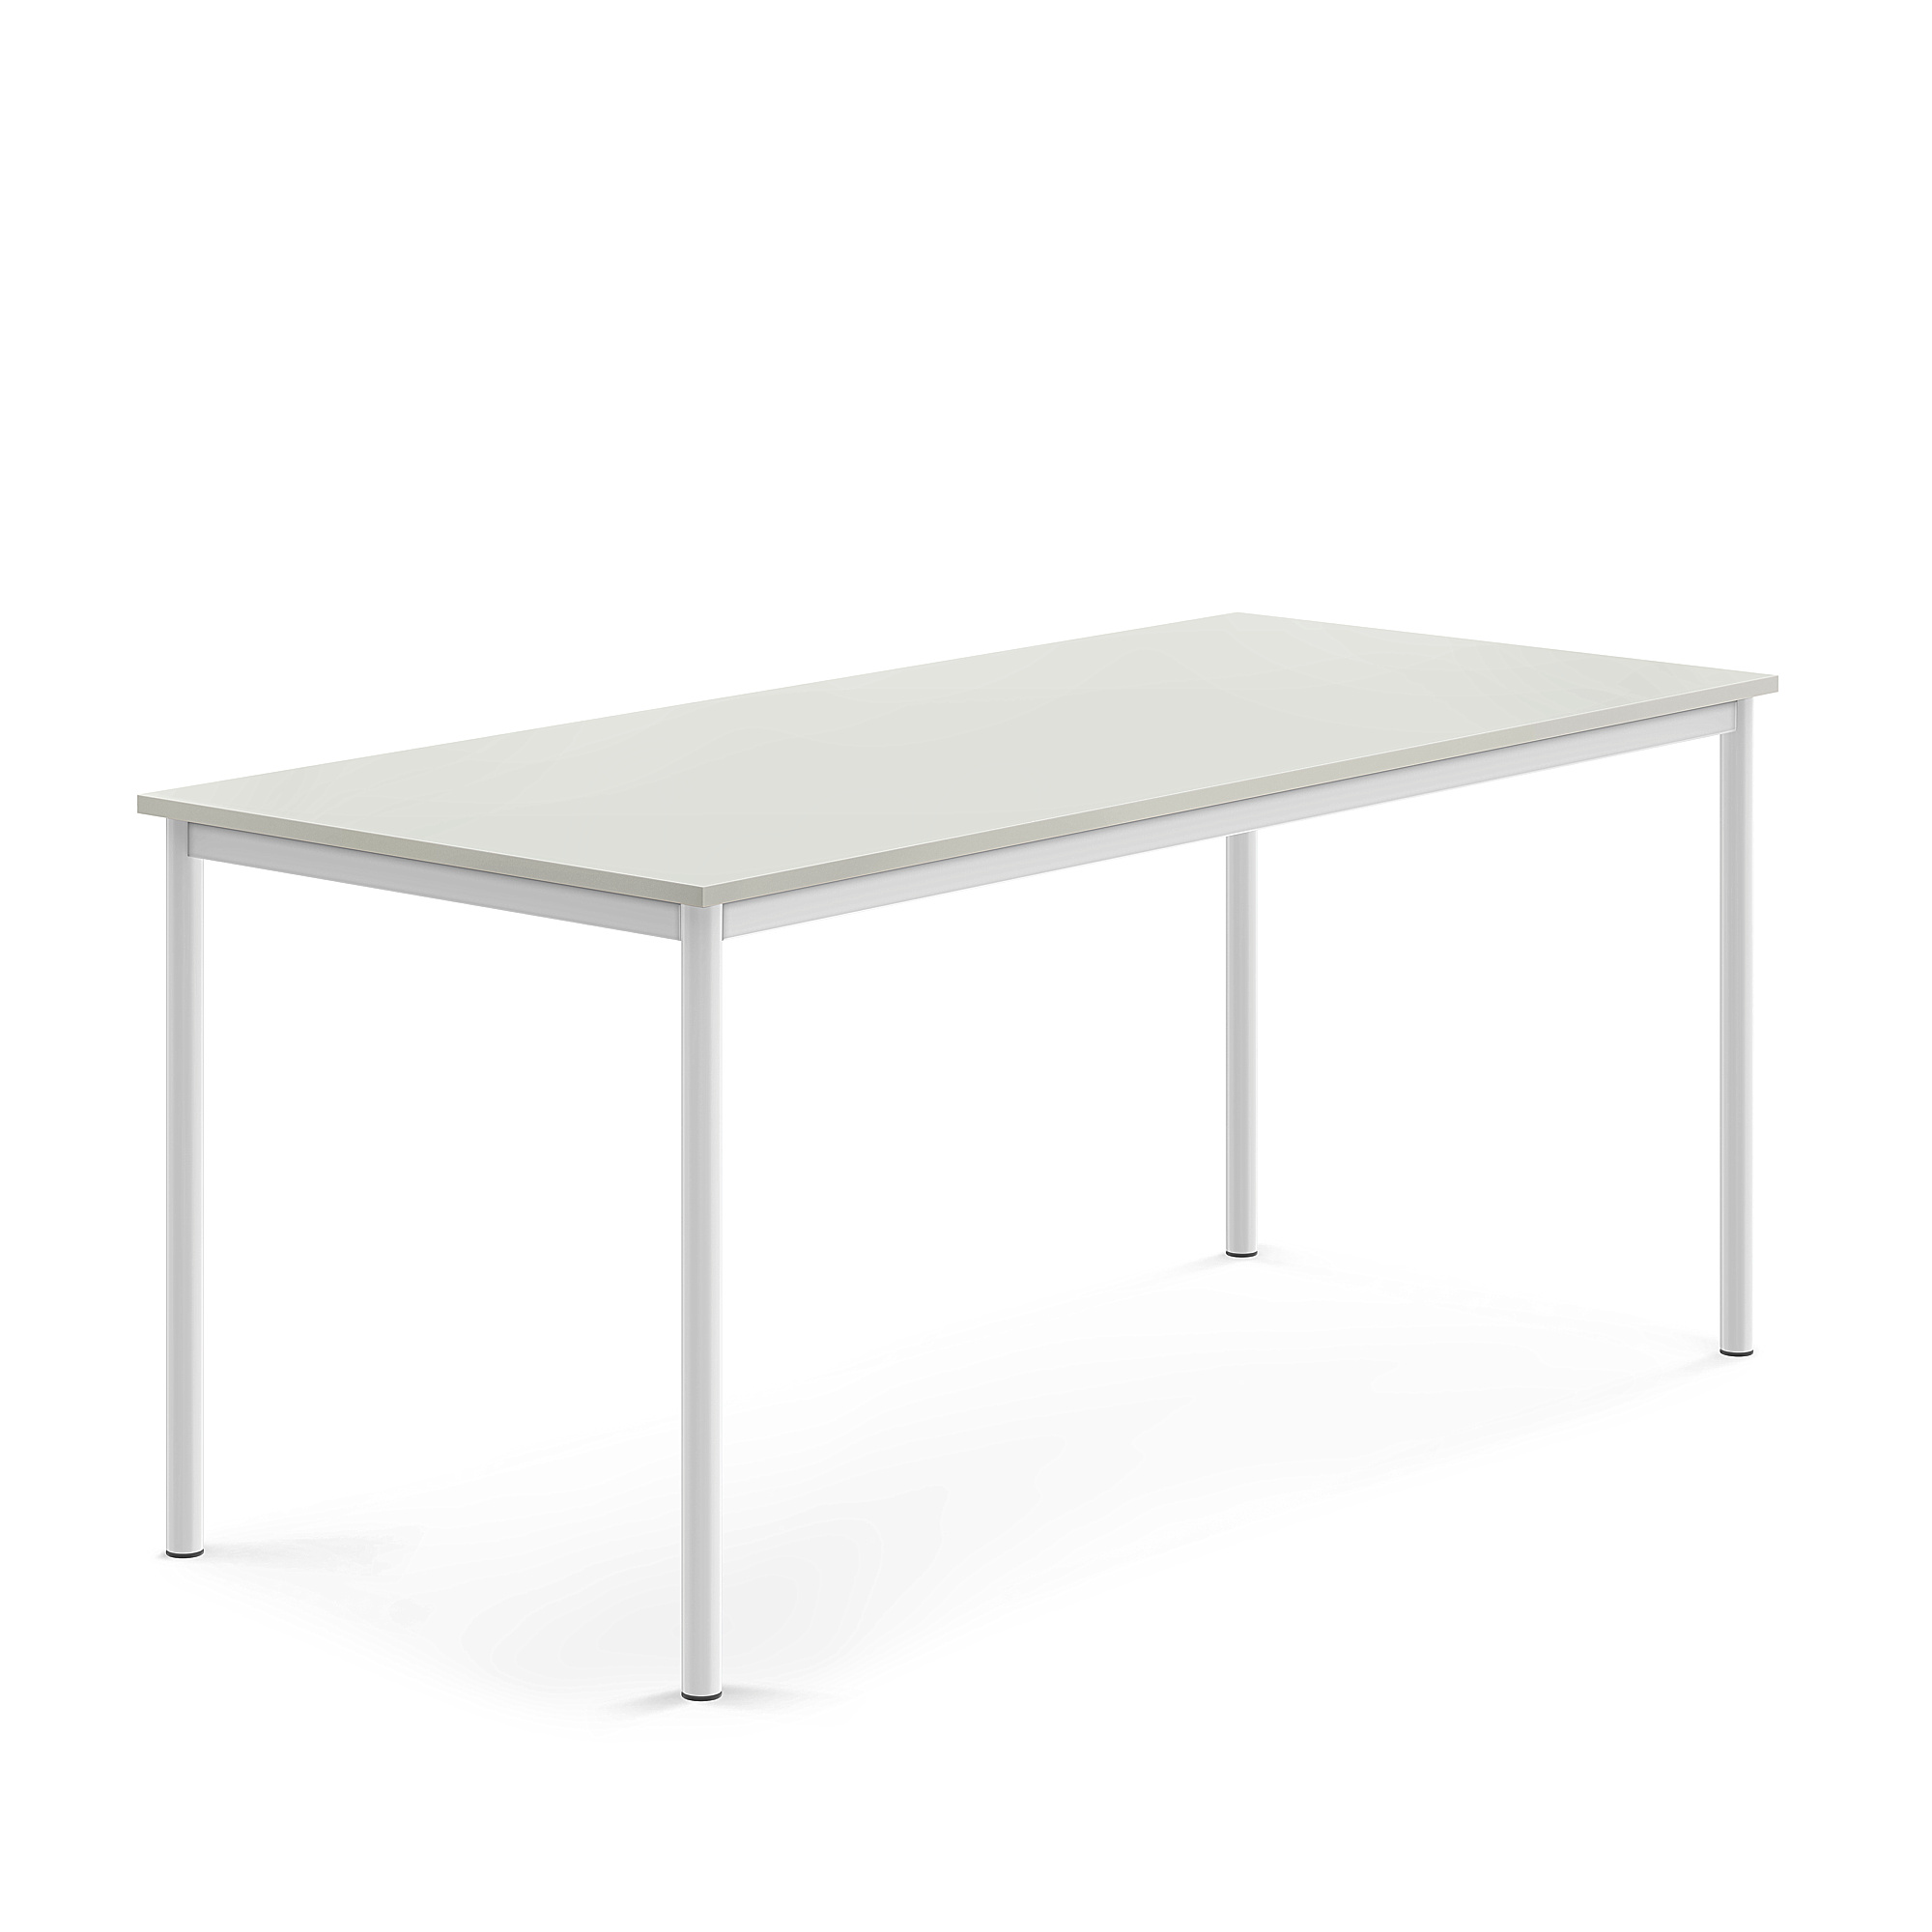 Stůl SONITUS, 1800x800x760 mm, bílé nohy, HPL deska tlumící hluk, šedá